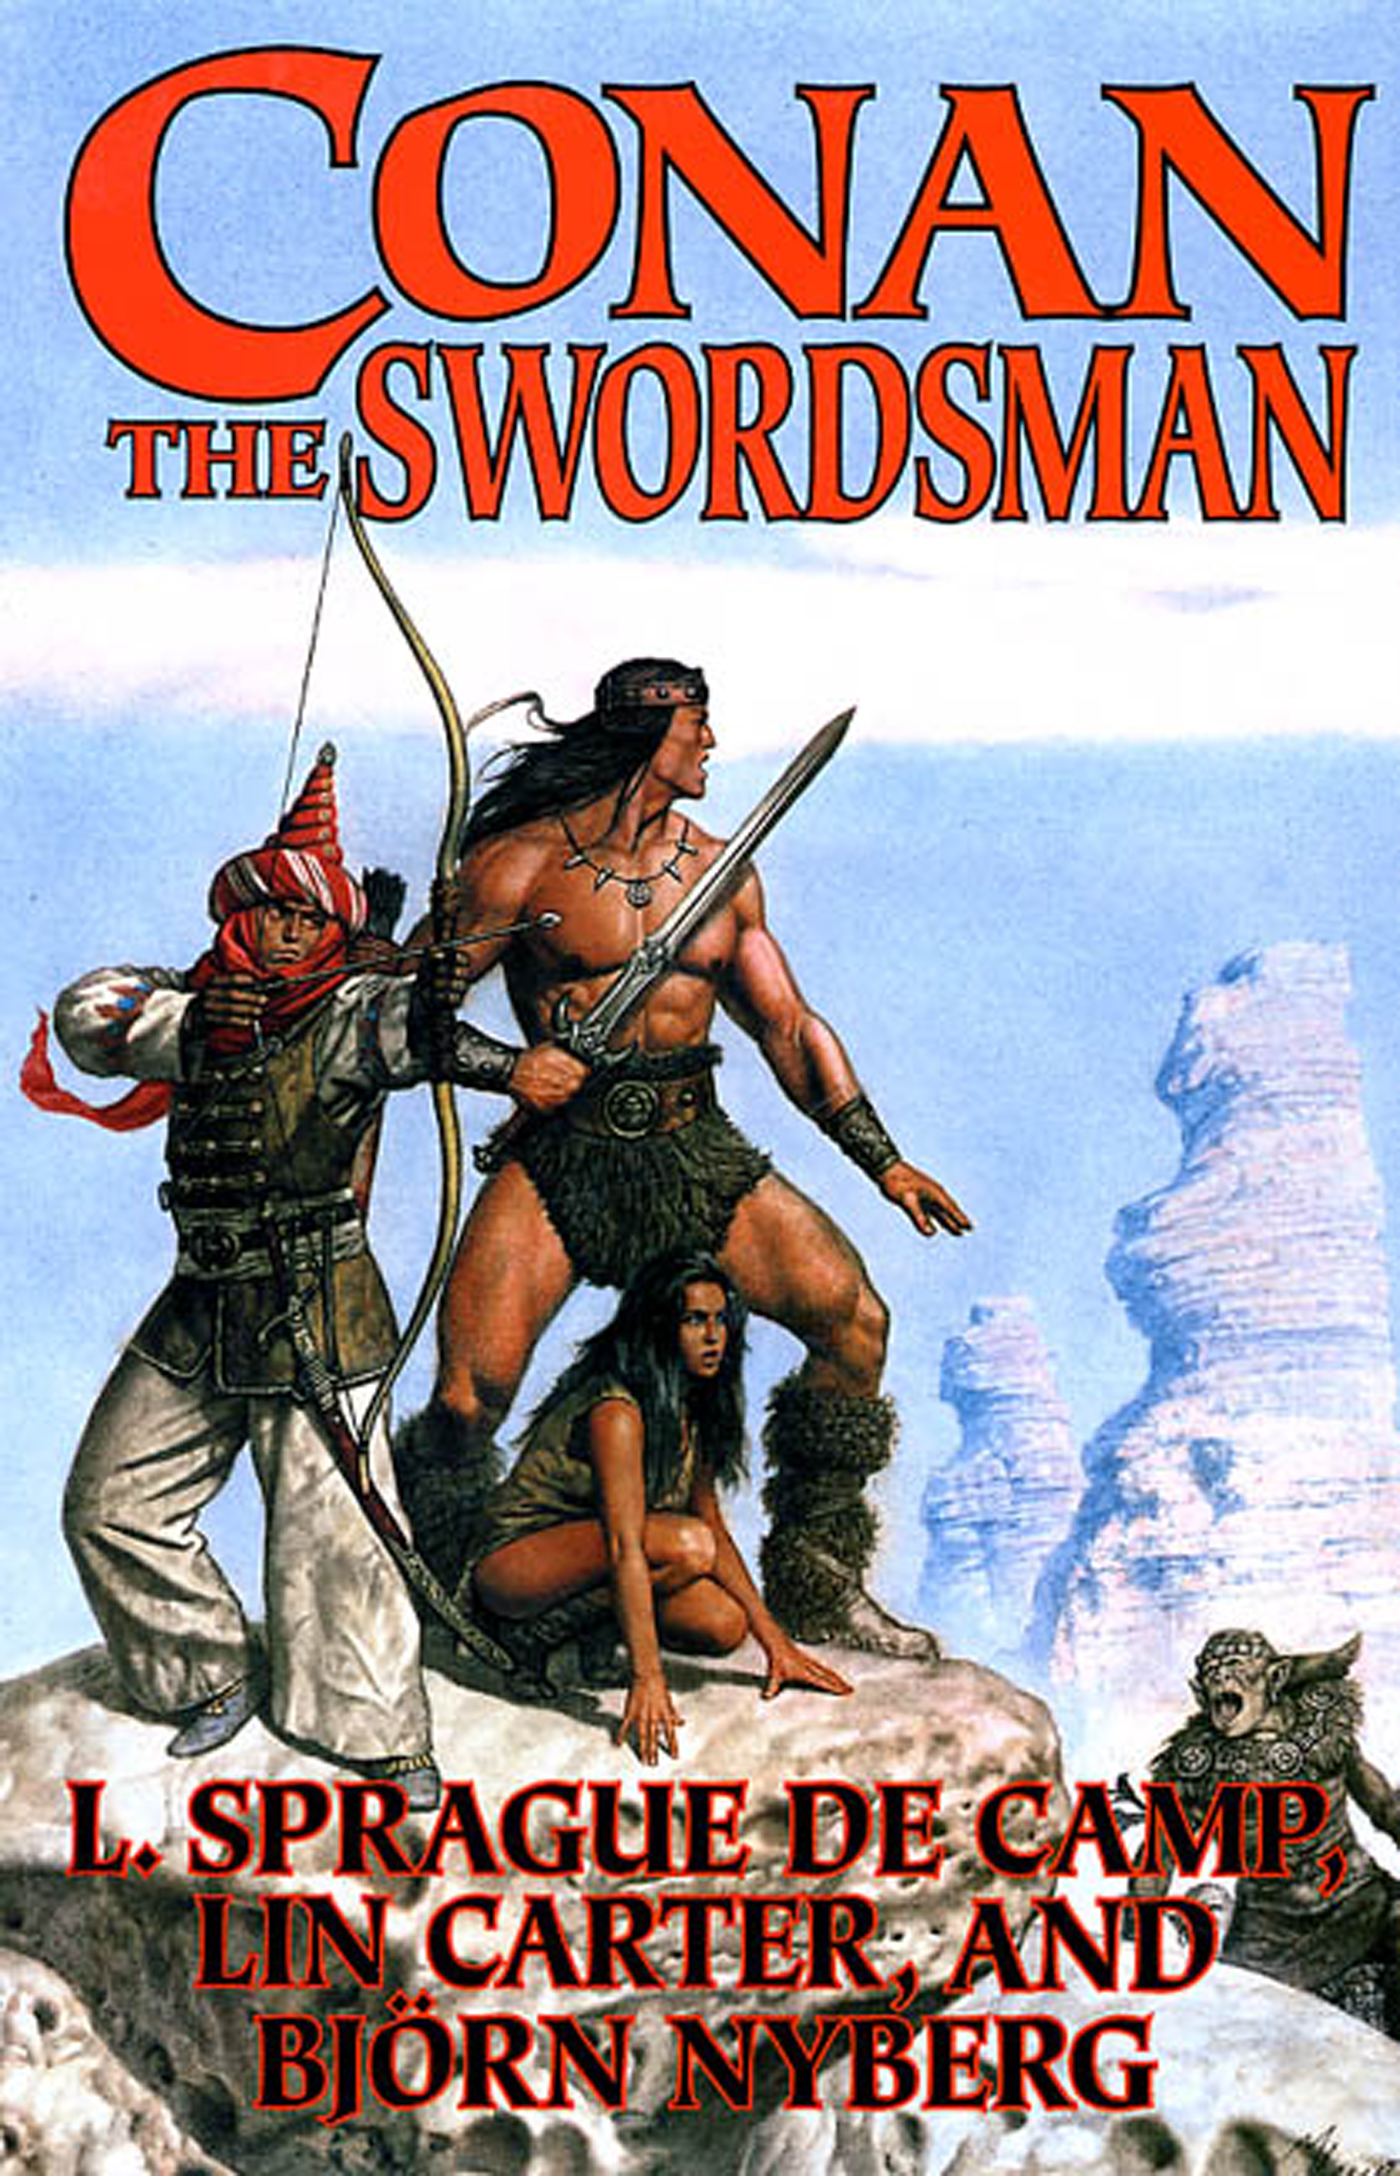 Conan The Swordsman by L. Sprague de Camp, Lin Carter, Bjorn Nyberg